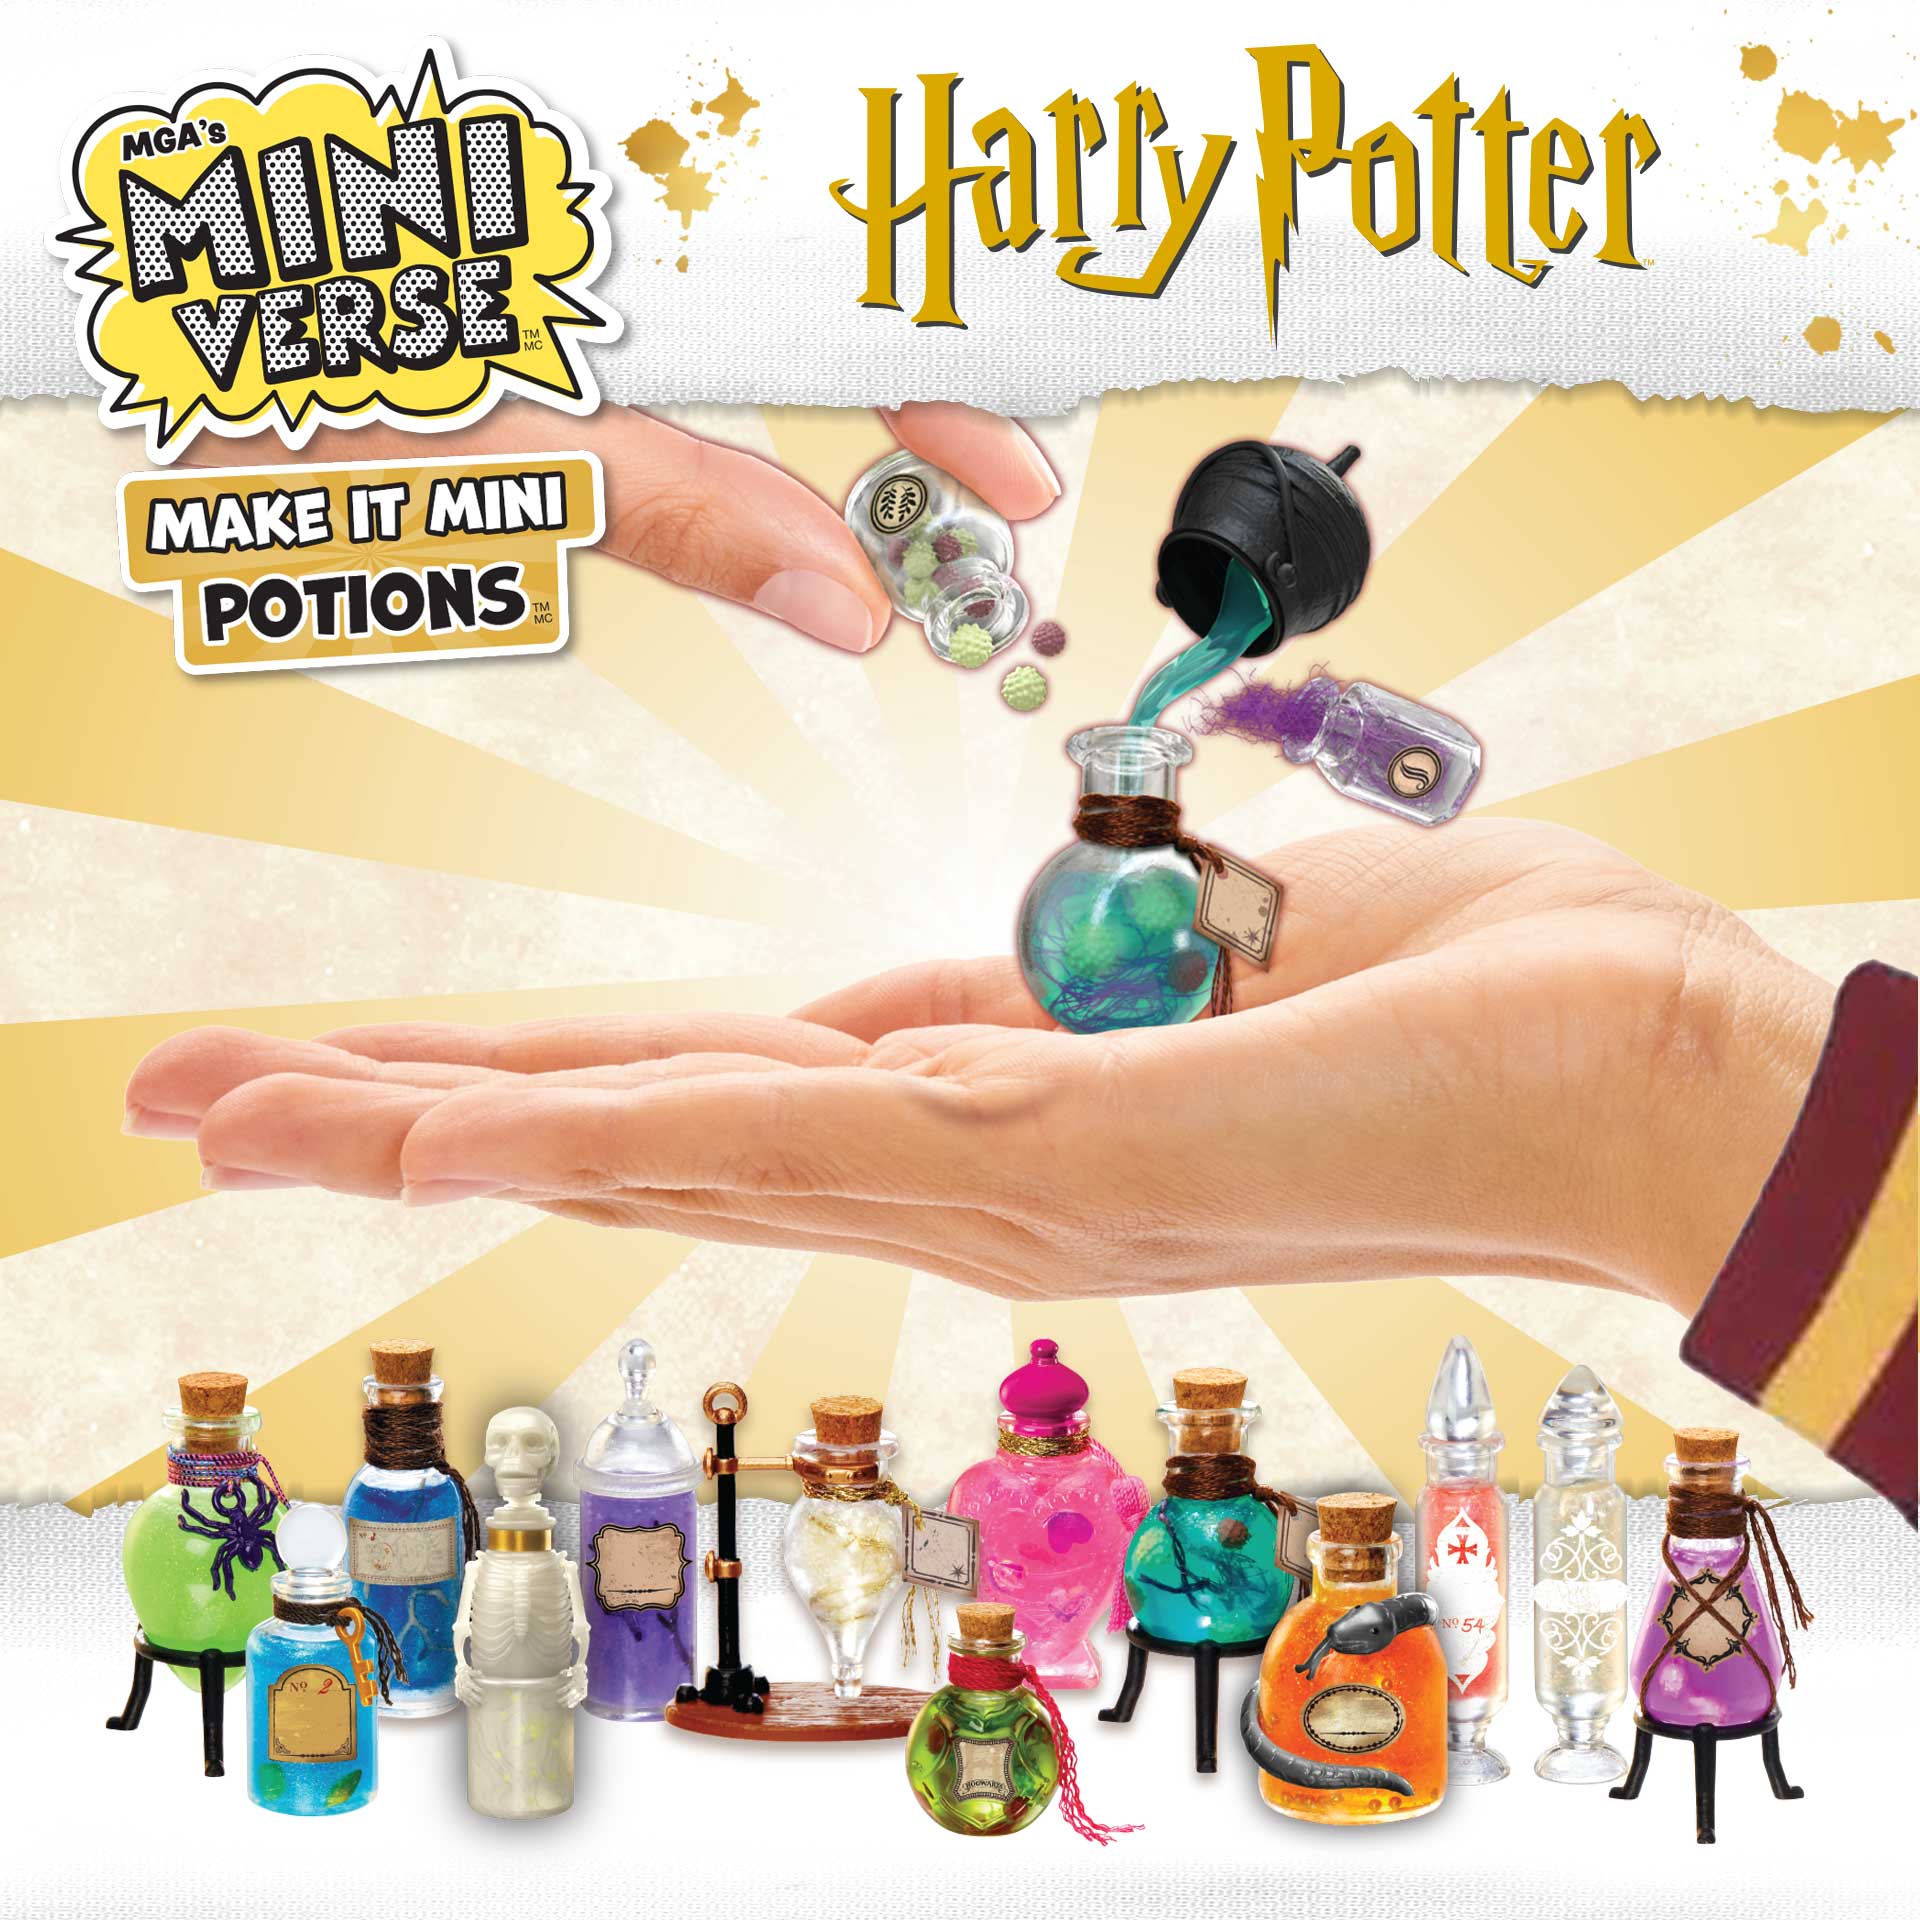 New Miniverse Harry Potter Potions shop now